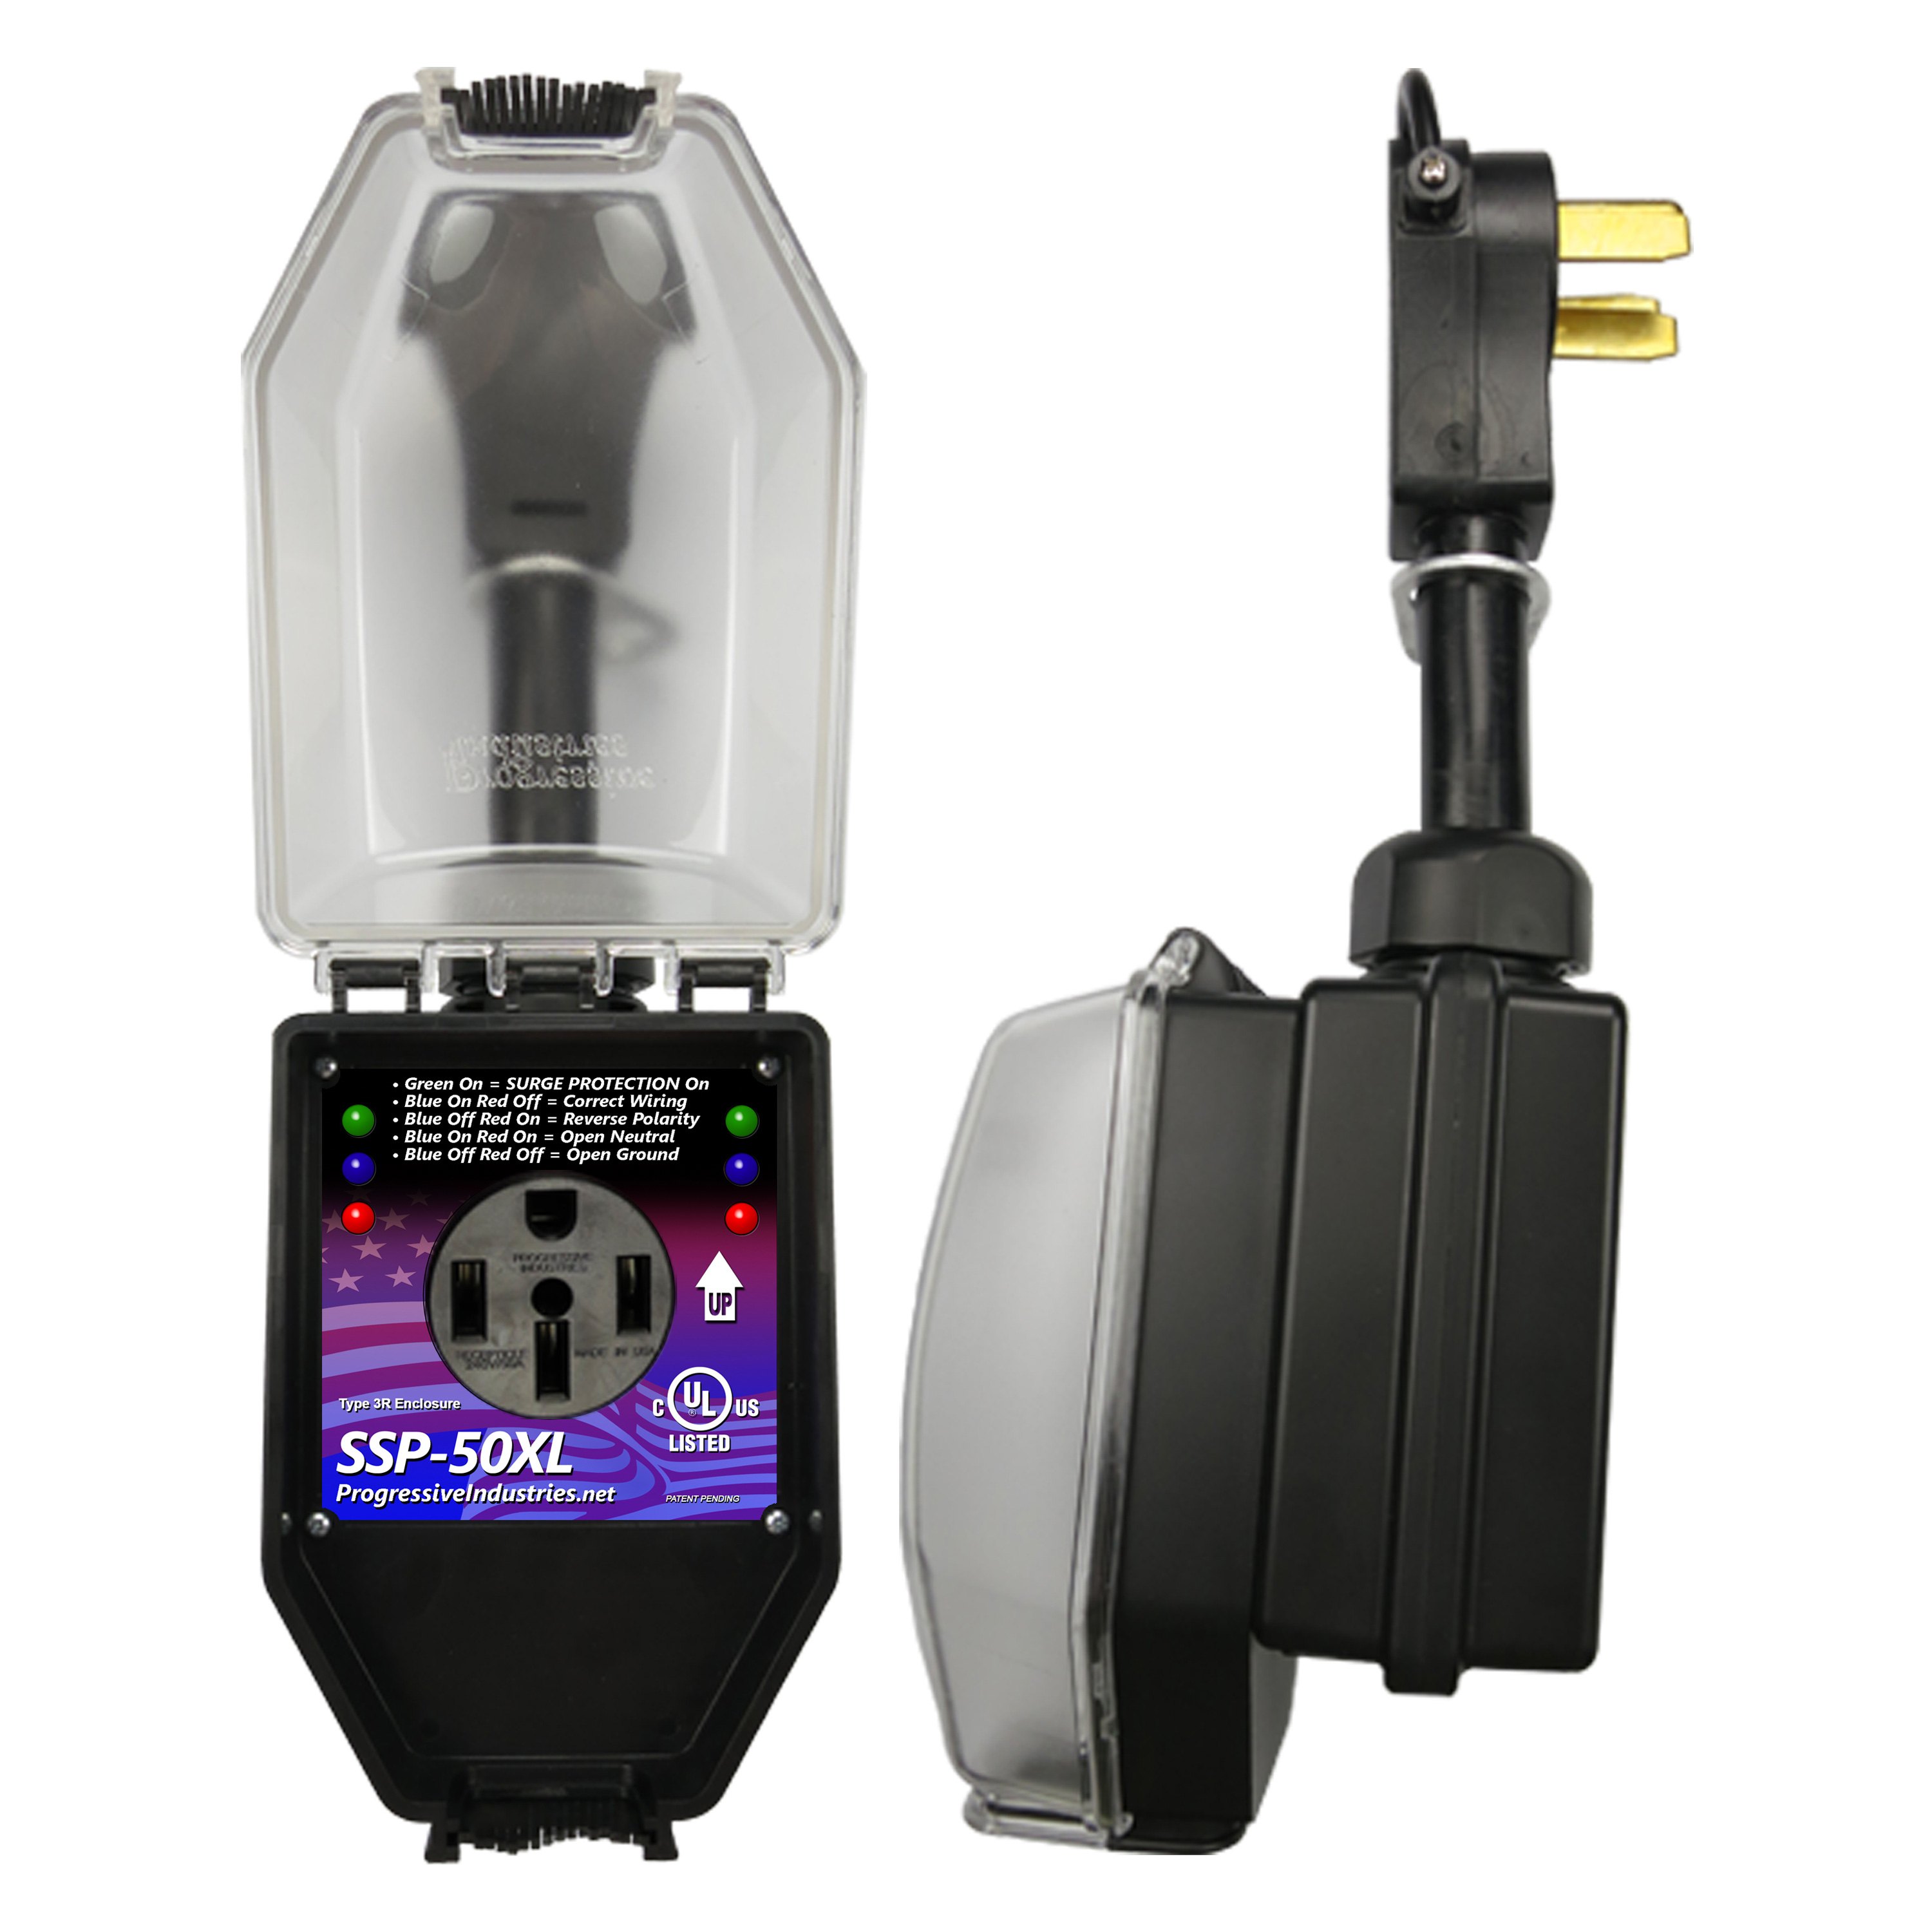 Progressive Industries SSP-50XL 50A Portable Smart Surge Protector 